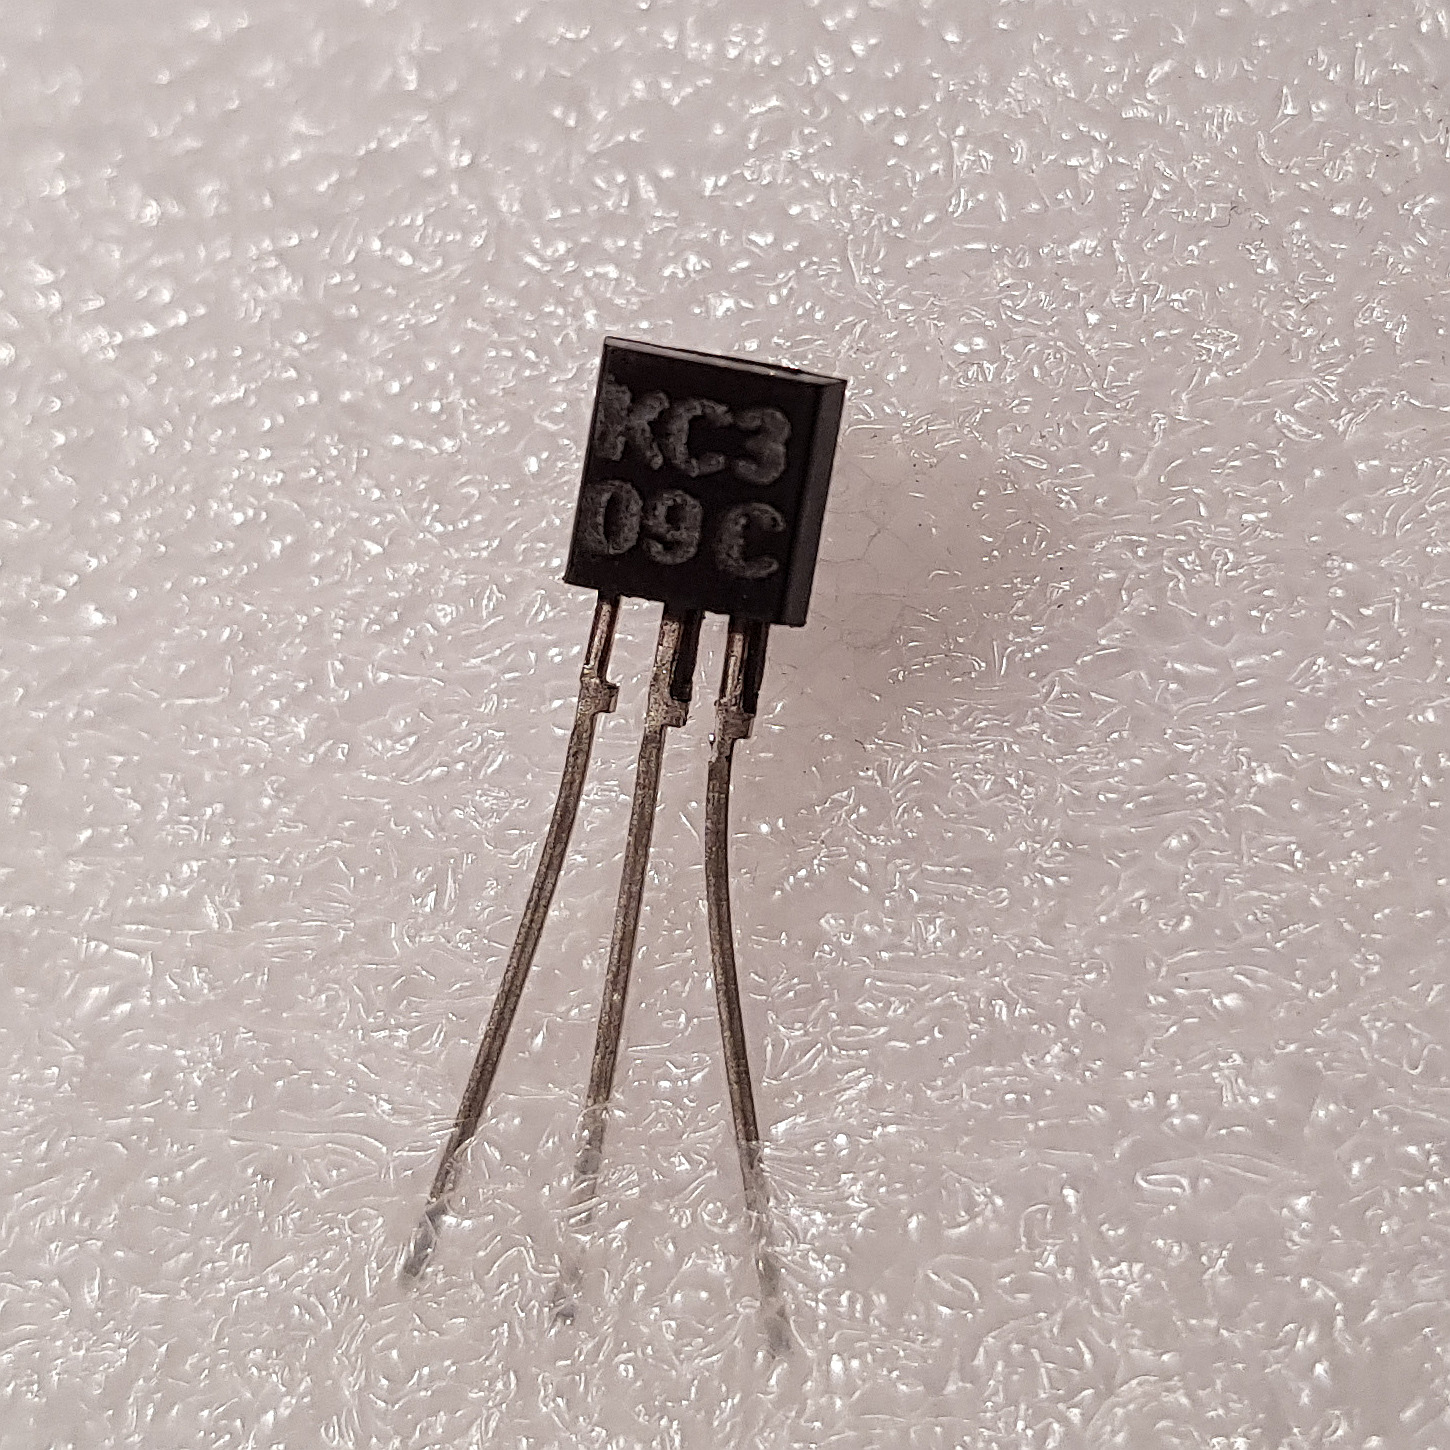 5 pcs KC309C BC309C - Si PNP transistor low noise - Tesla - Made in Czech Rep.